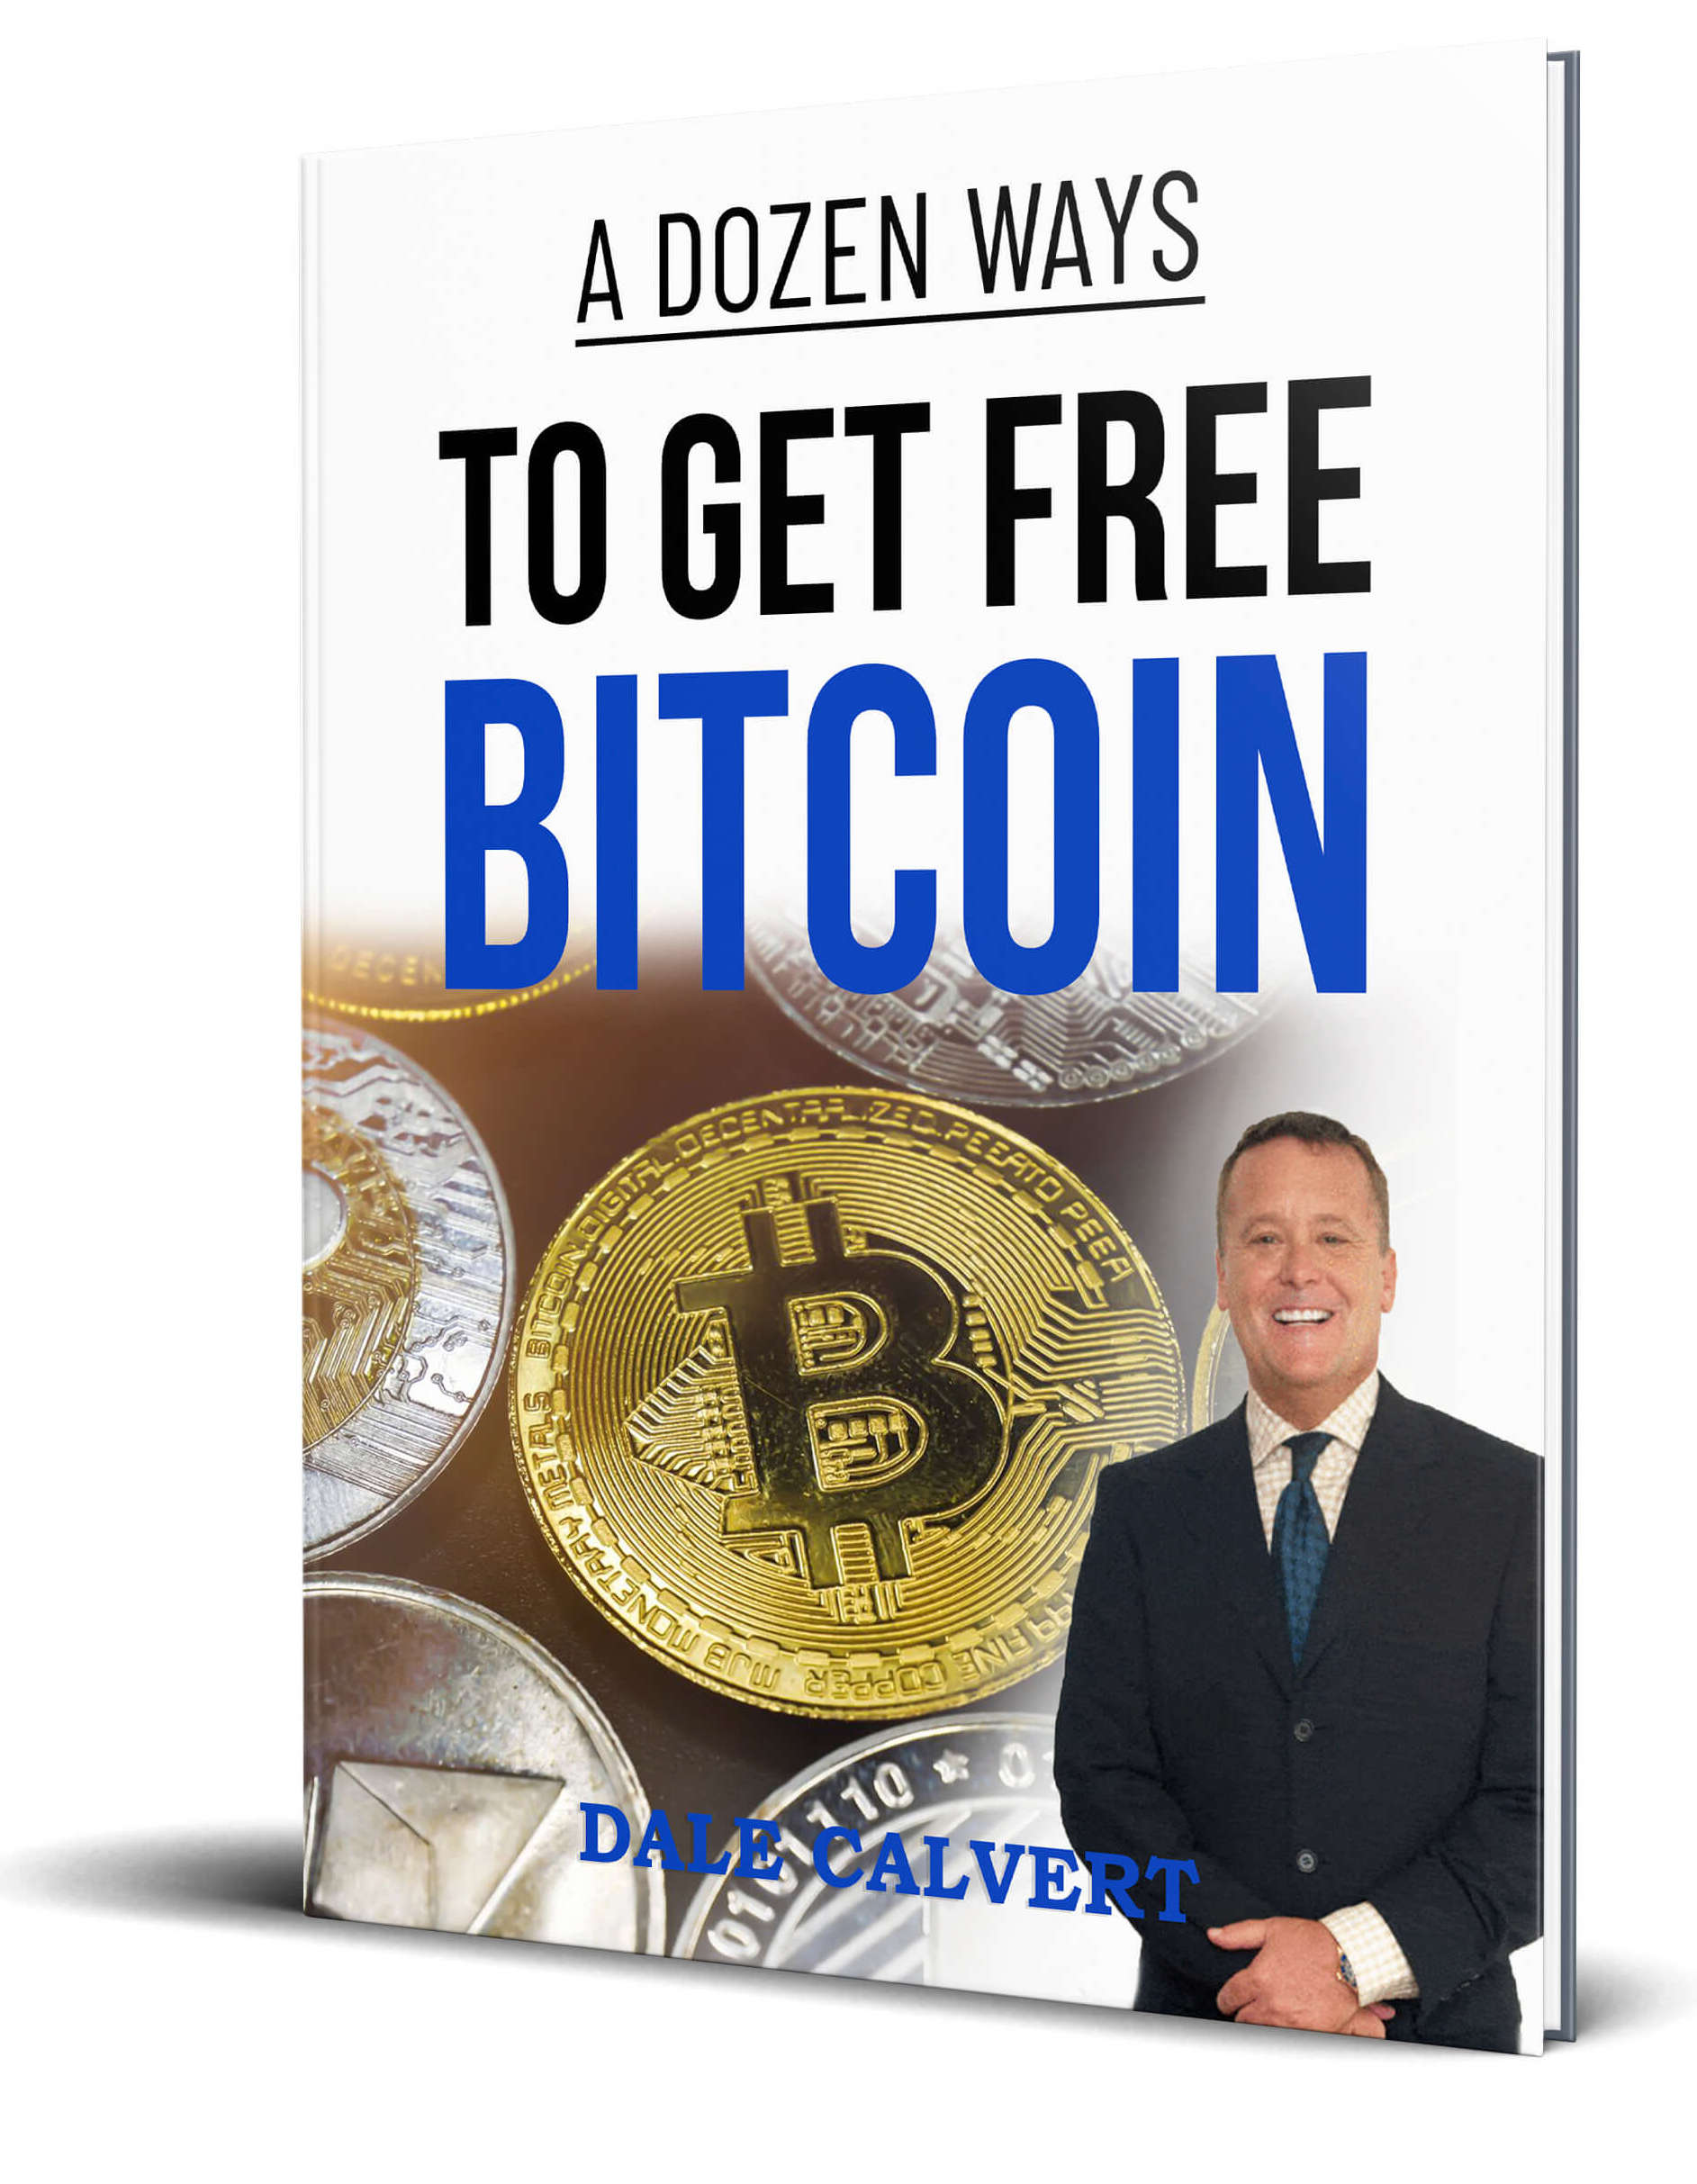 A Dozen Ways to get Free Bitcoin PDF Guide Report Dale Calvert